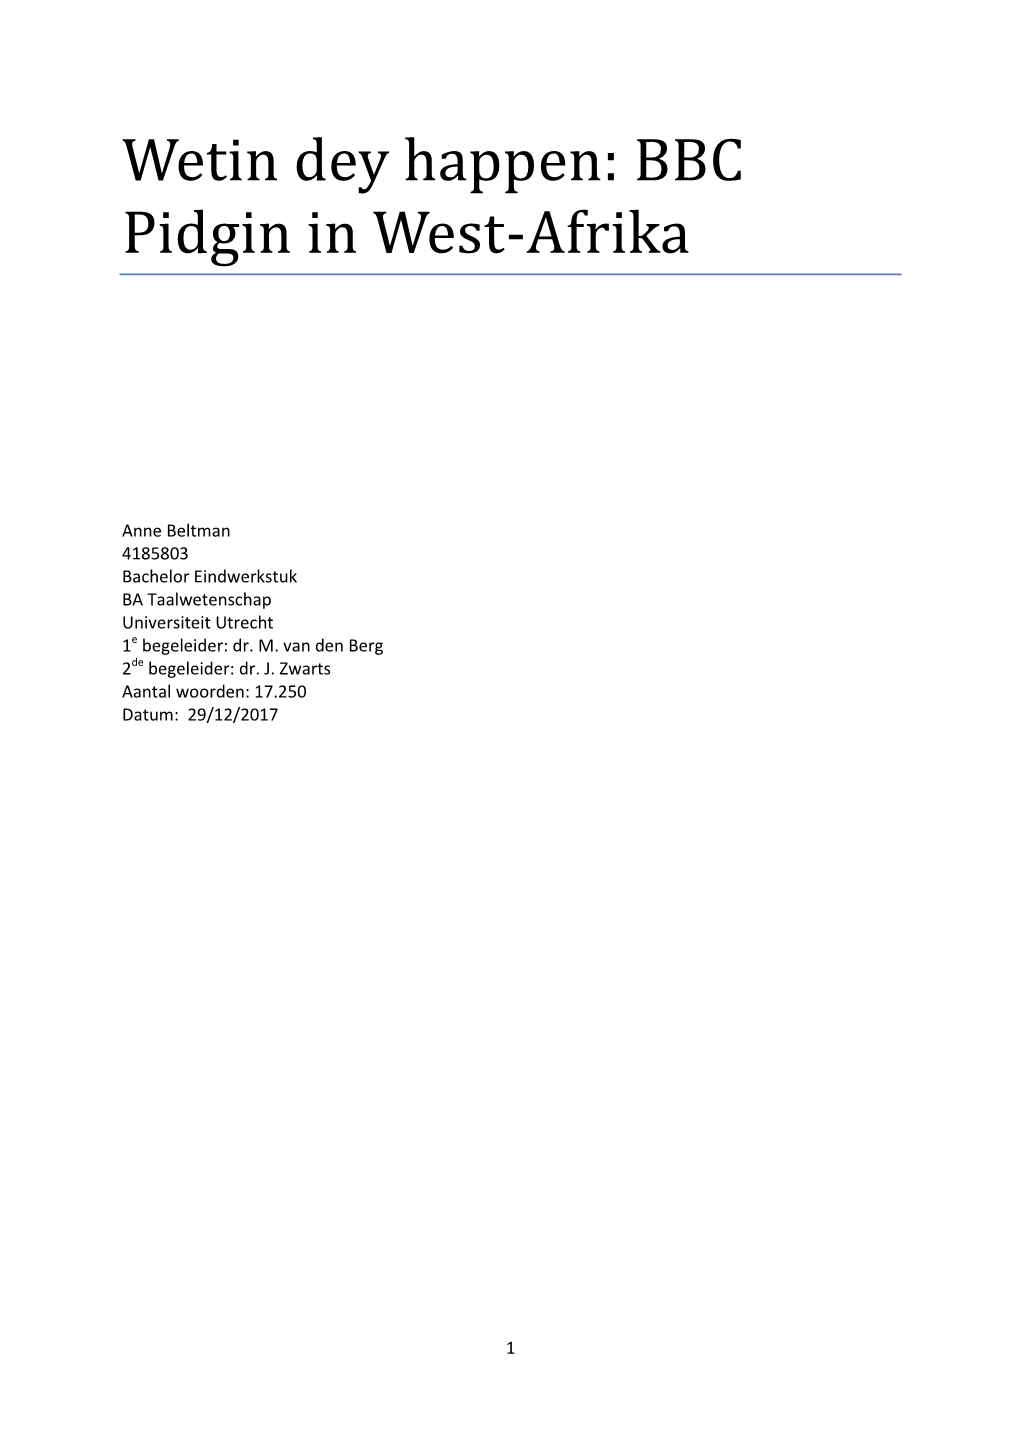 BBC Pidgin in West-Afrika